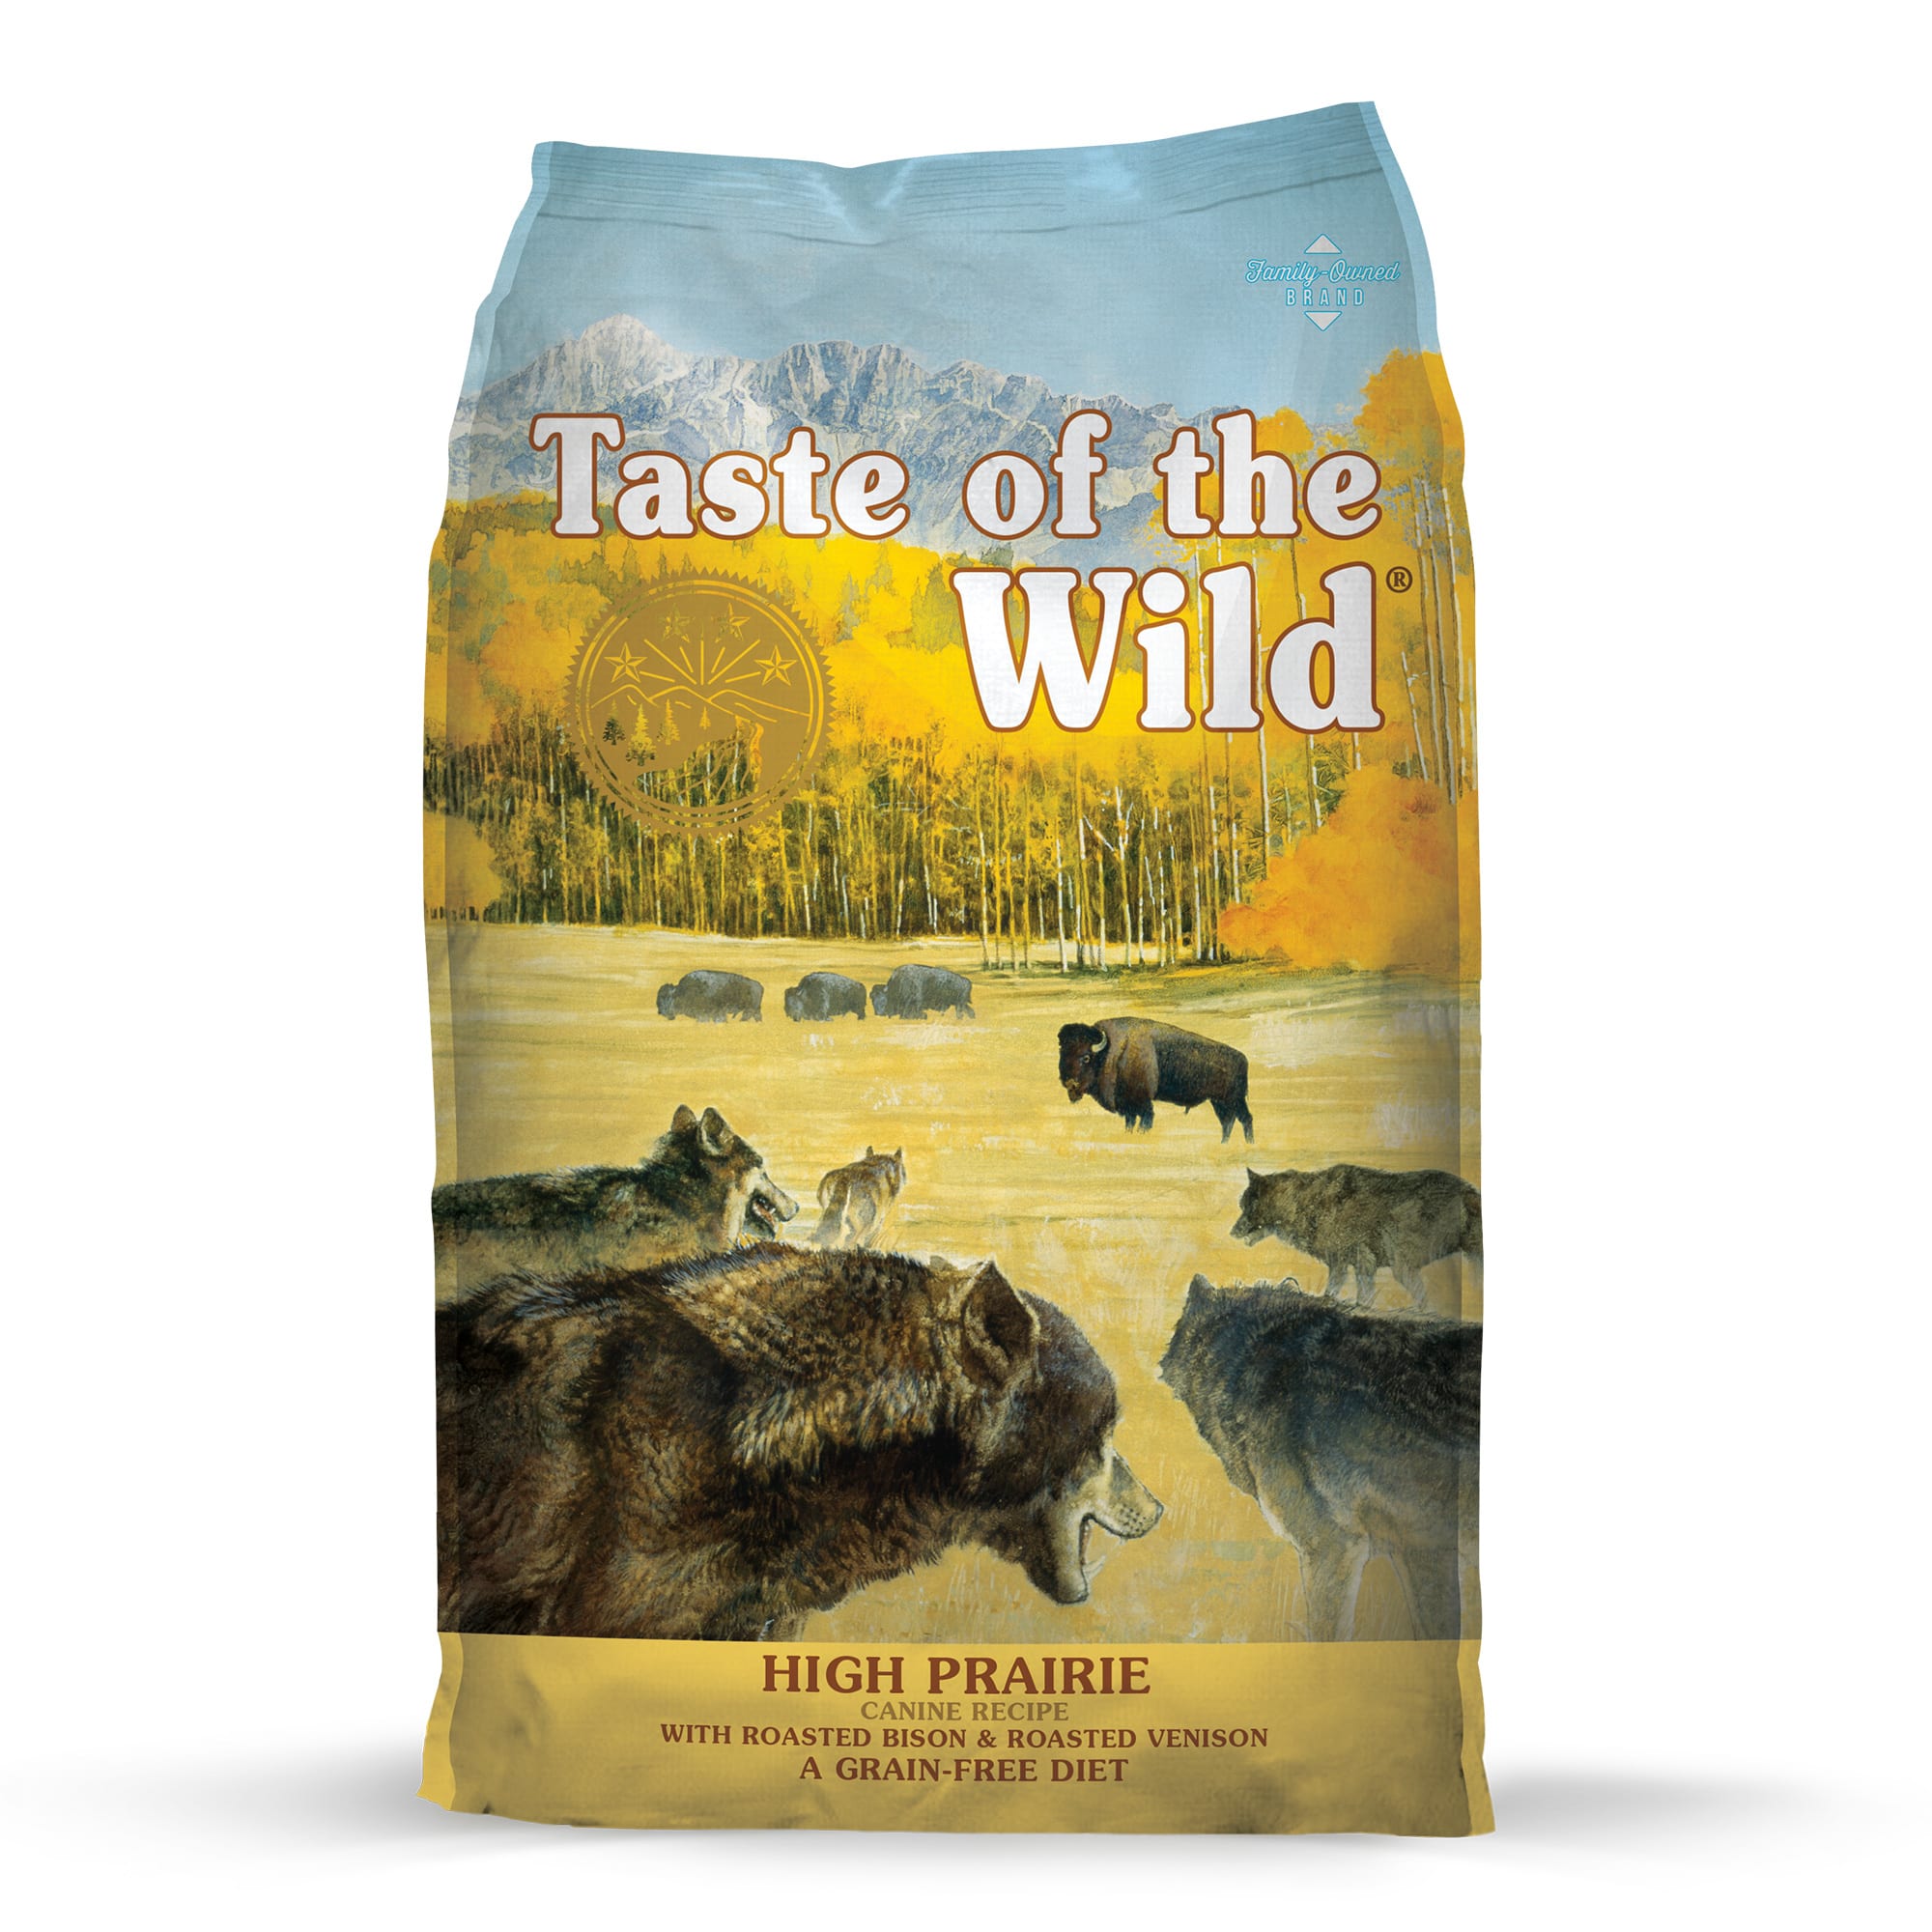 Taste of the Wild Grain-Free Pet Food 